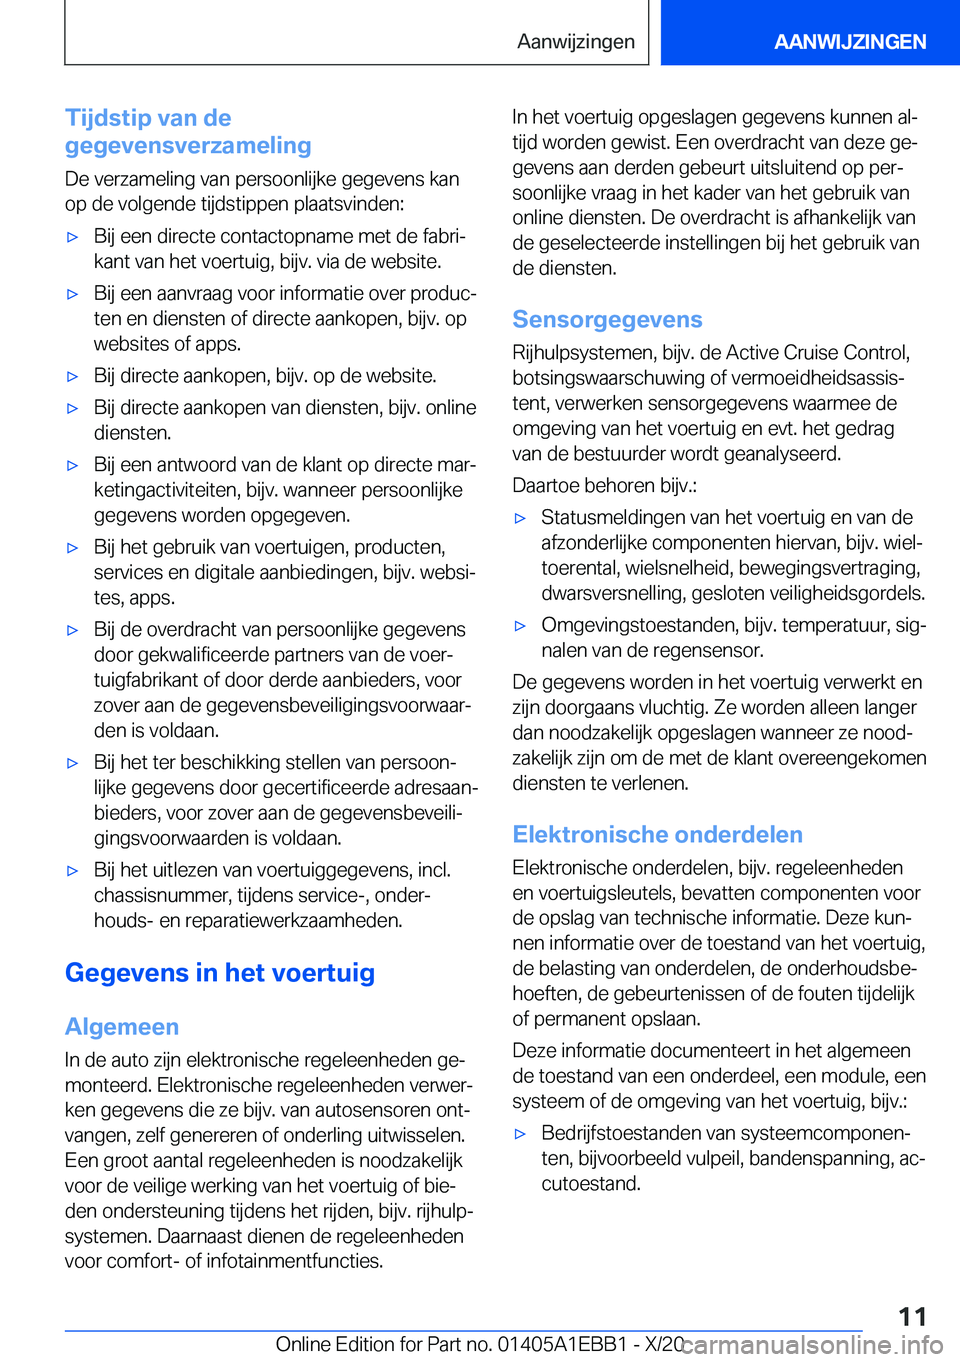 BMW 3 SERIES 2021  Instructieboekjes (in Dutch) �T�i�j�d�s�t�i�p��v�a�n��d�e
�g�e�g�e�v�e�n�s�v�e�r�z�a�m�e�l�i�n�g
�D�e��v�e�r�z�a�m�e�l�i�n�g��v�a�n��p�e�r�s�o�o�n�l�i�j�k�e��g�e�g�e�v�e�n�s��k�a�n
�o�p��d�e��v�o�l�g�e�n�d�e��t�i�j�d�s�